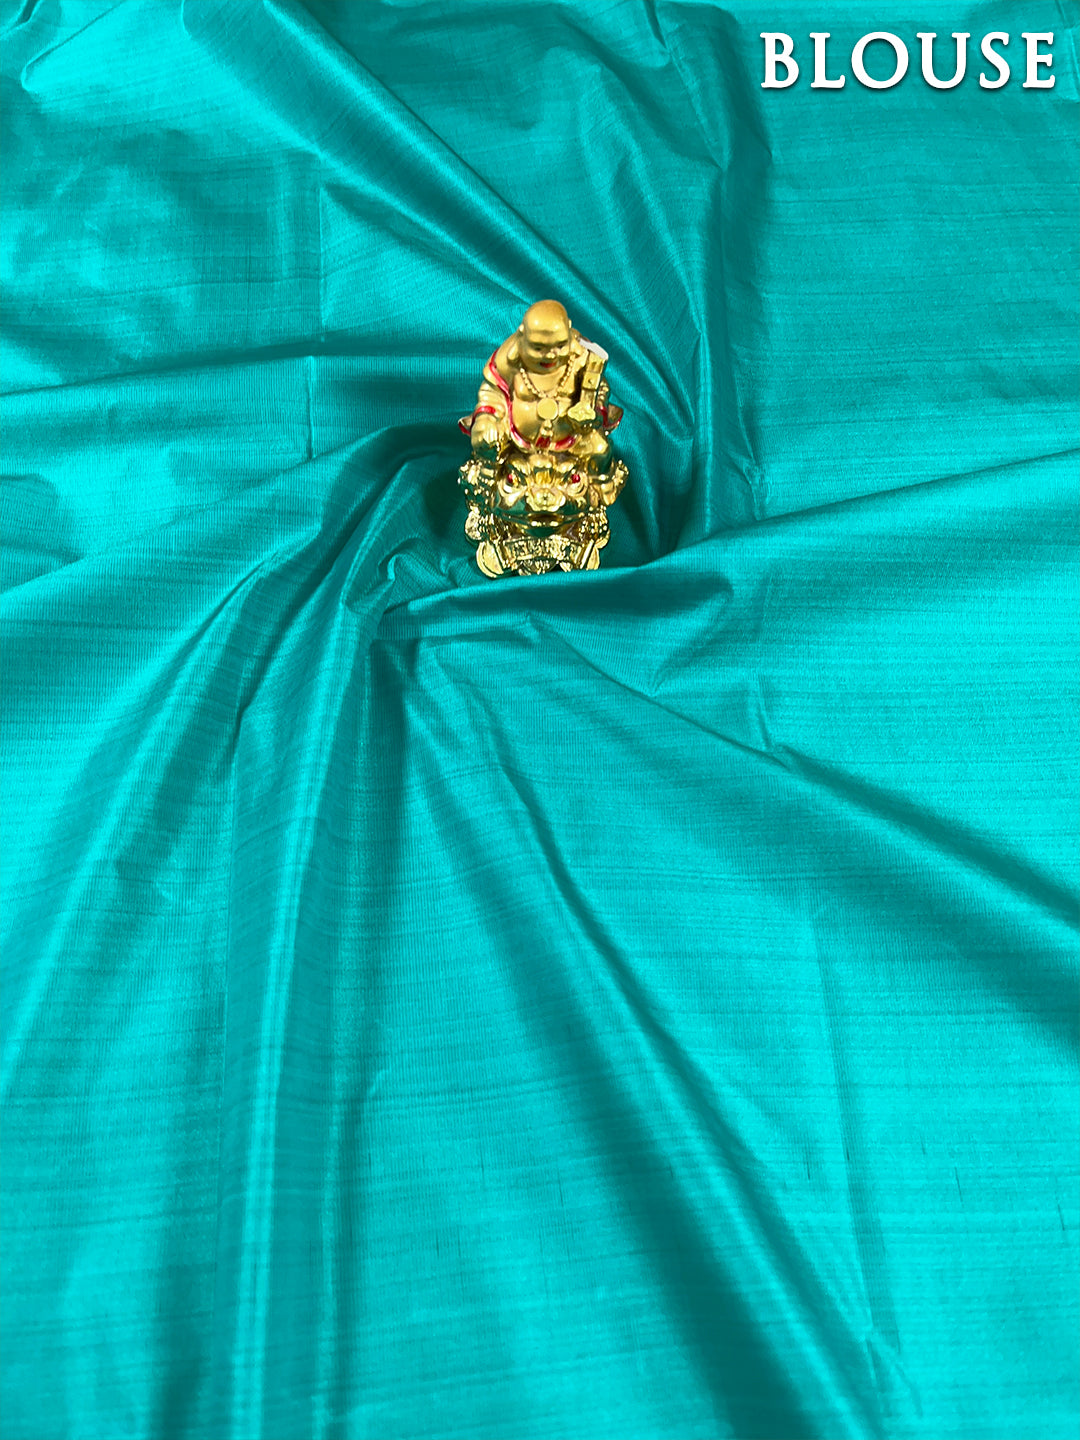 Green kanchipuram soft silk saree